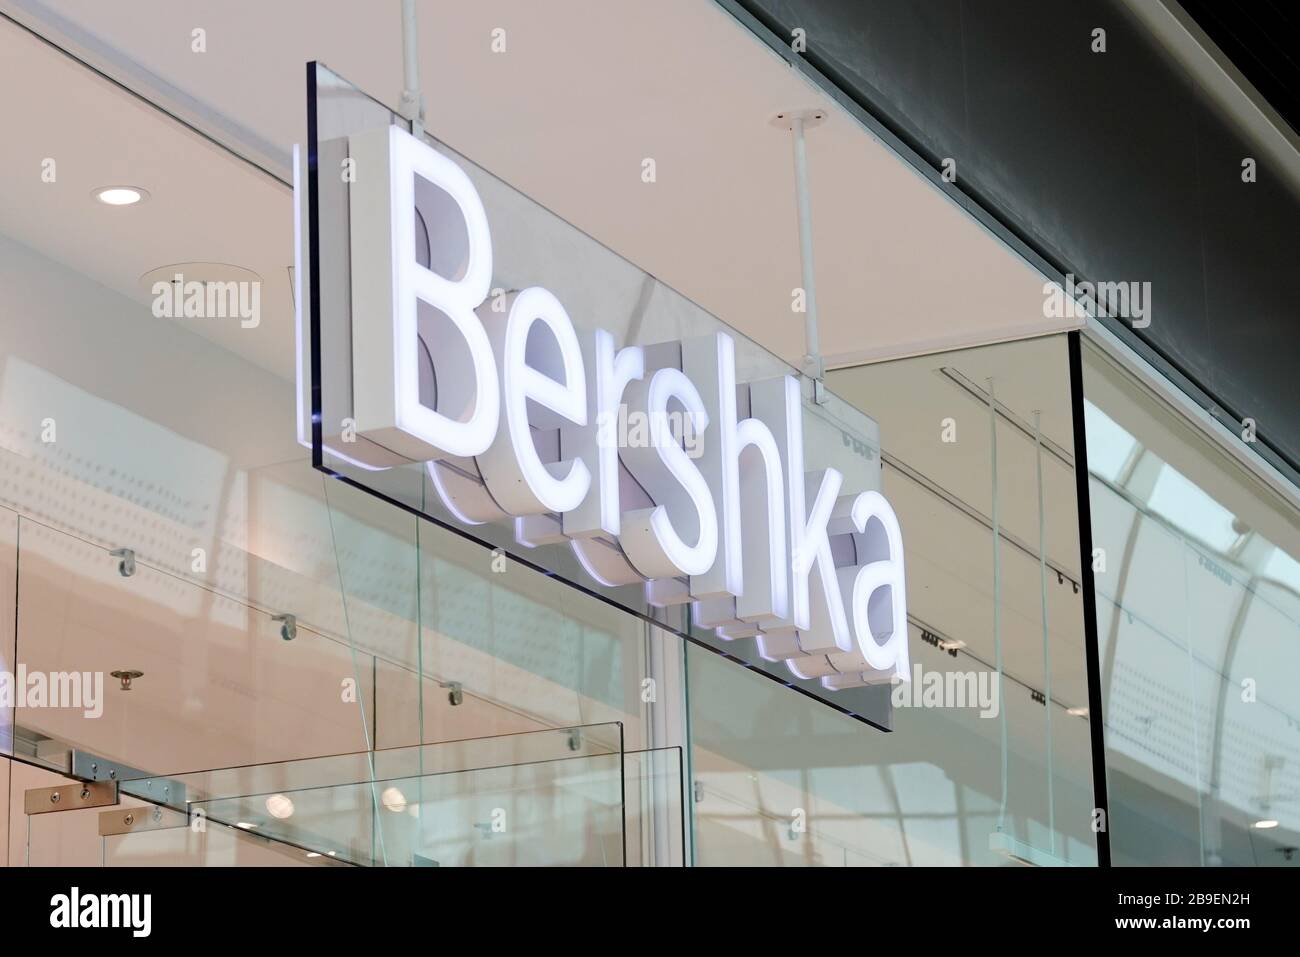 Bordeaux , Aquitaine / France - 10 17 2019 : Bershka sign shop logo  retailer store clothing part of the Spanish Inditex group Stock Photo -  Alamy